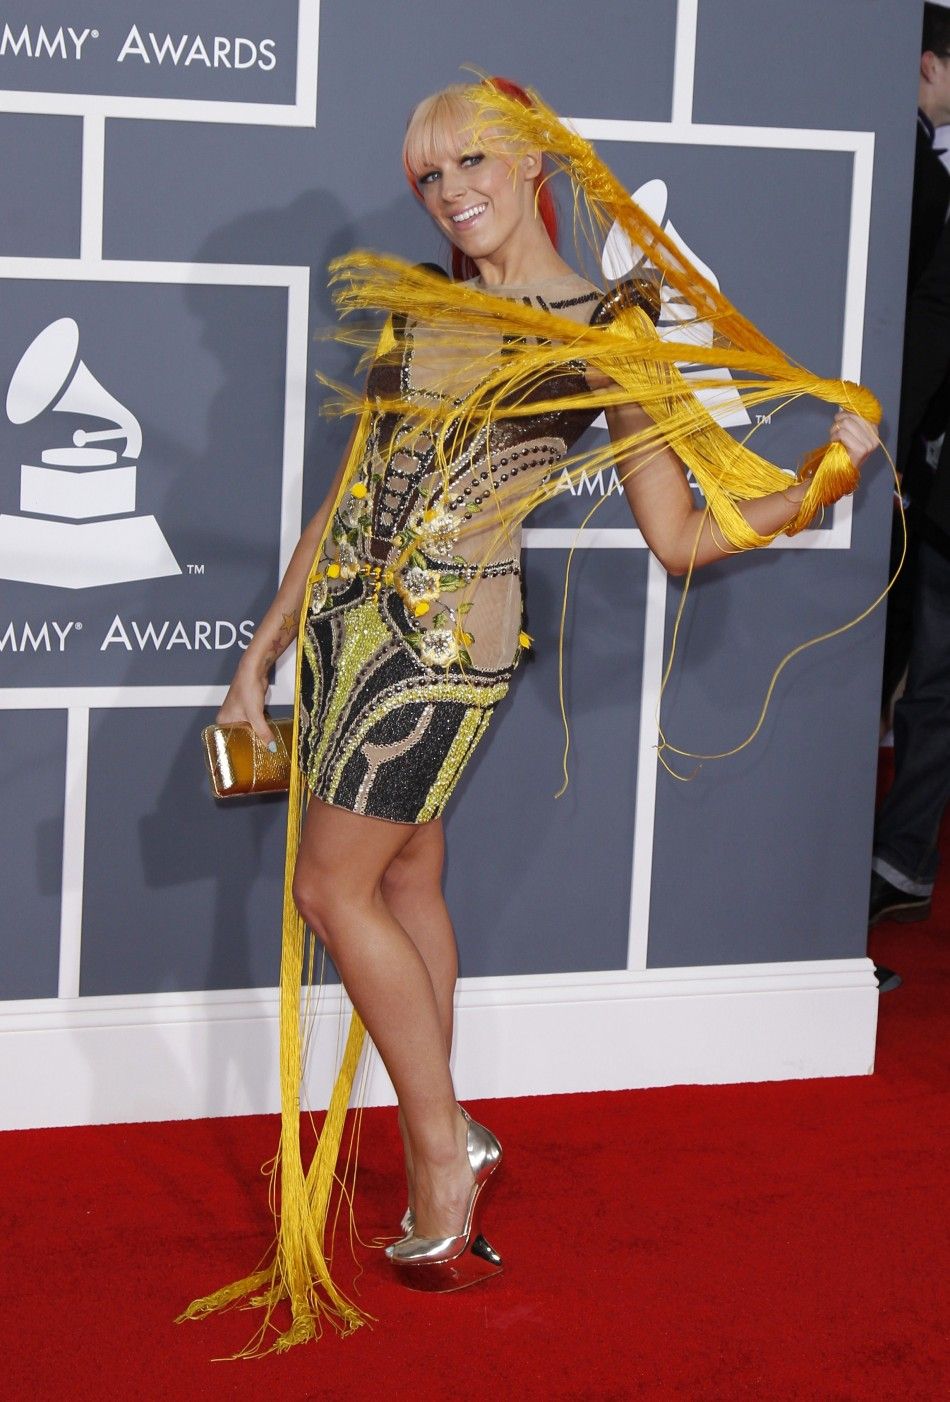 Grammys 2012 Red Carpet Worst Dressed 